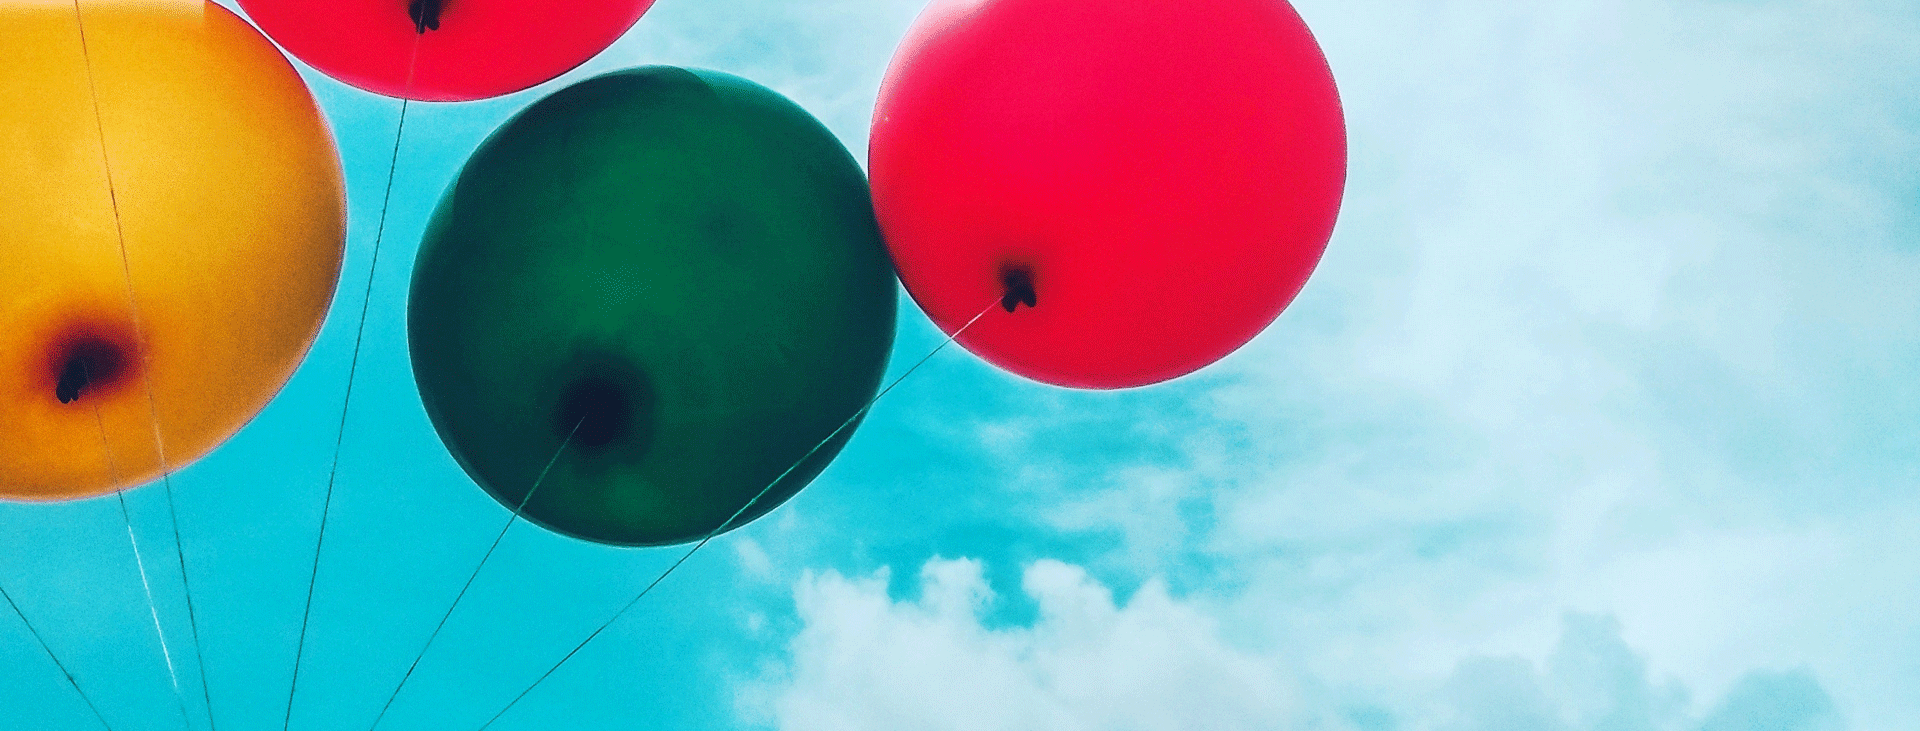 Four multi-color balloons against a blue sky